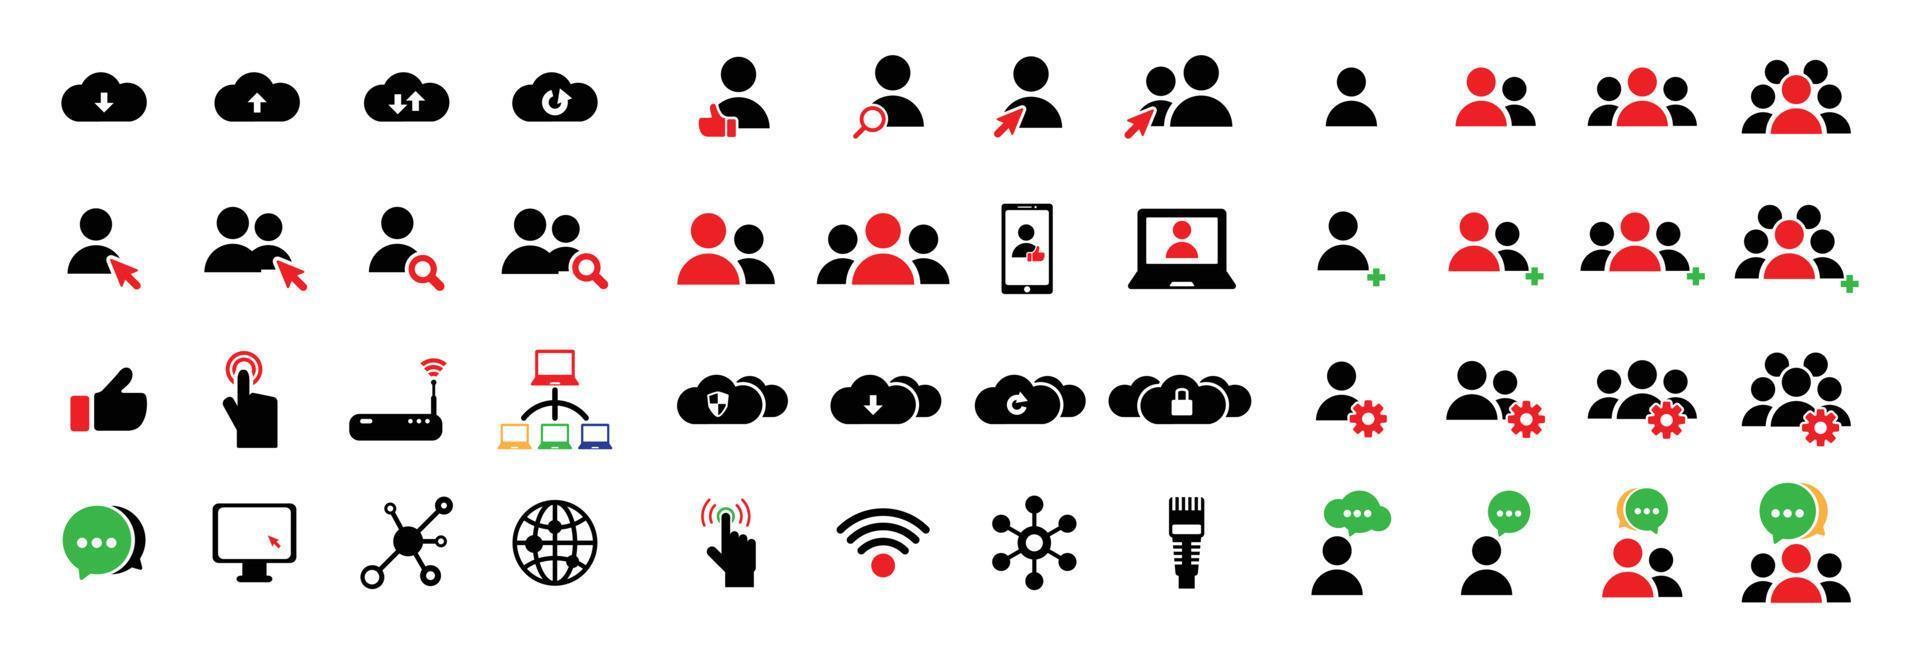 network icon vector illustration